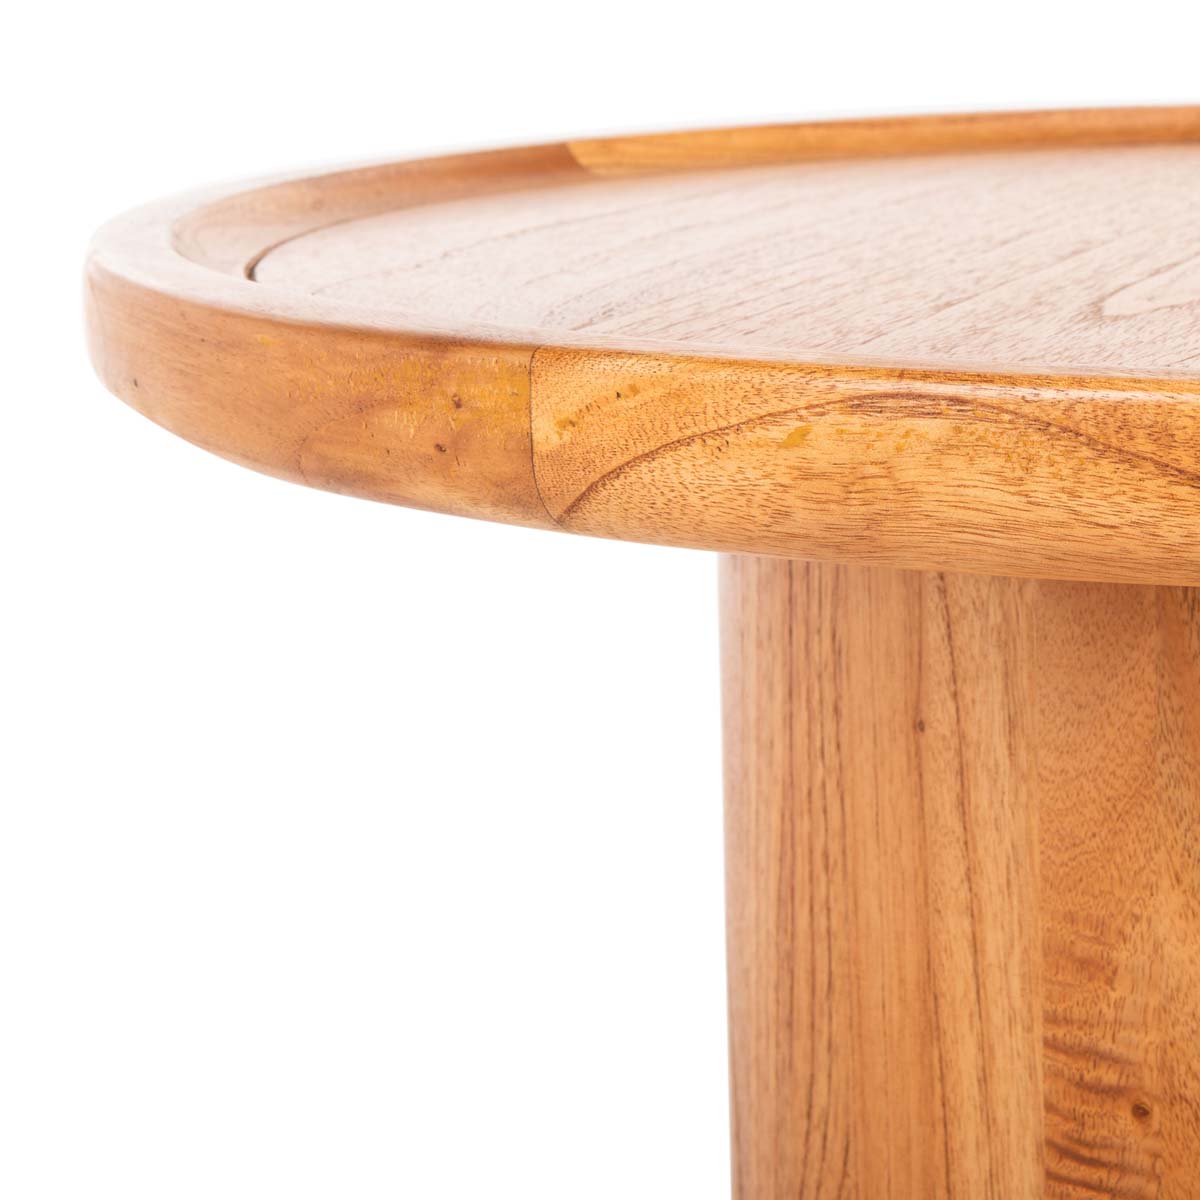 Safavieh Devin Round Pedestal Coffee Table , COF6600 - Natural